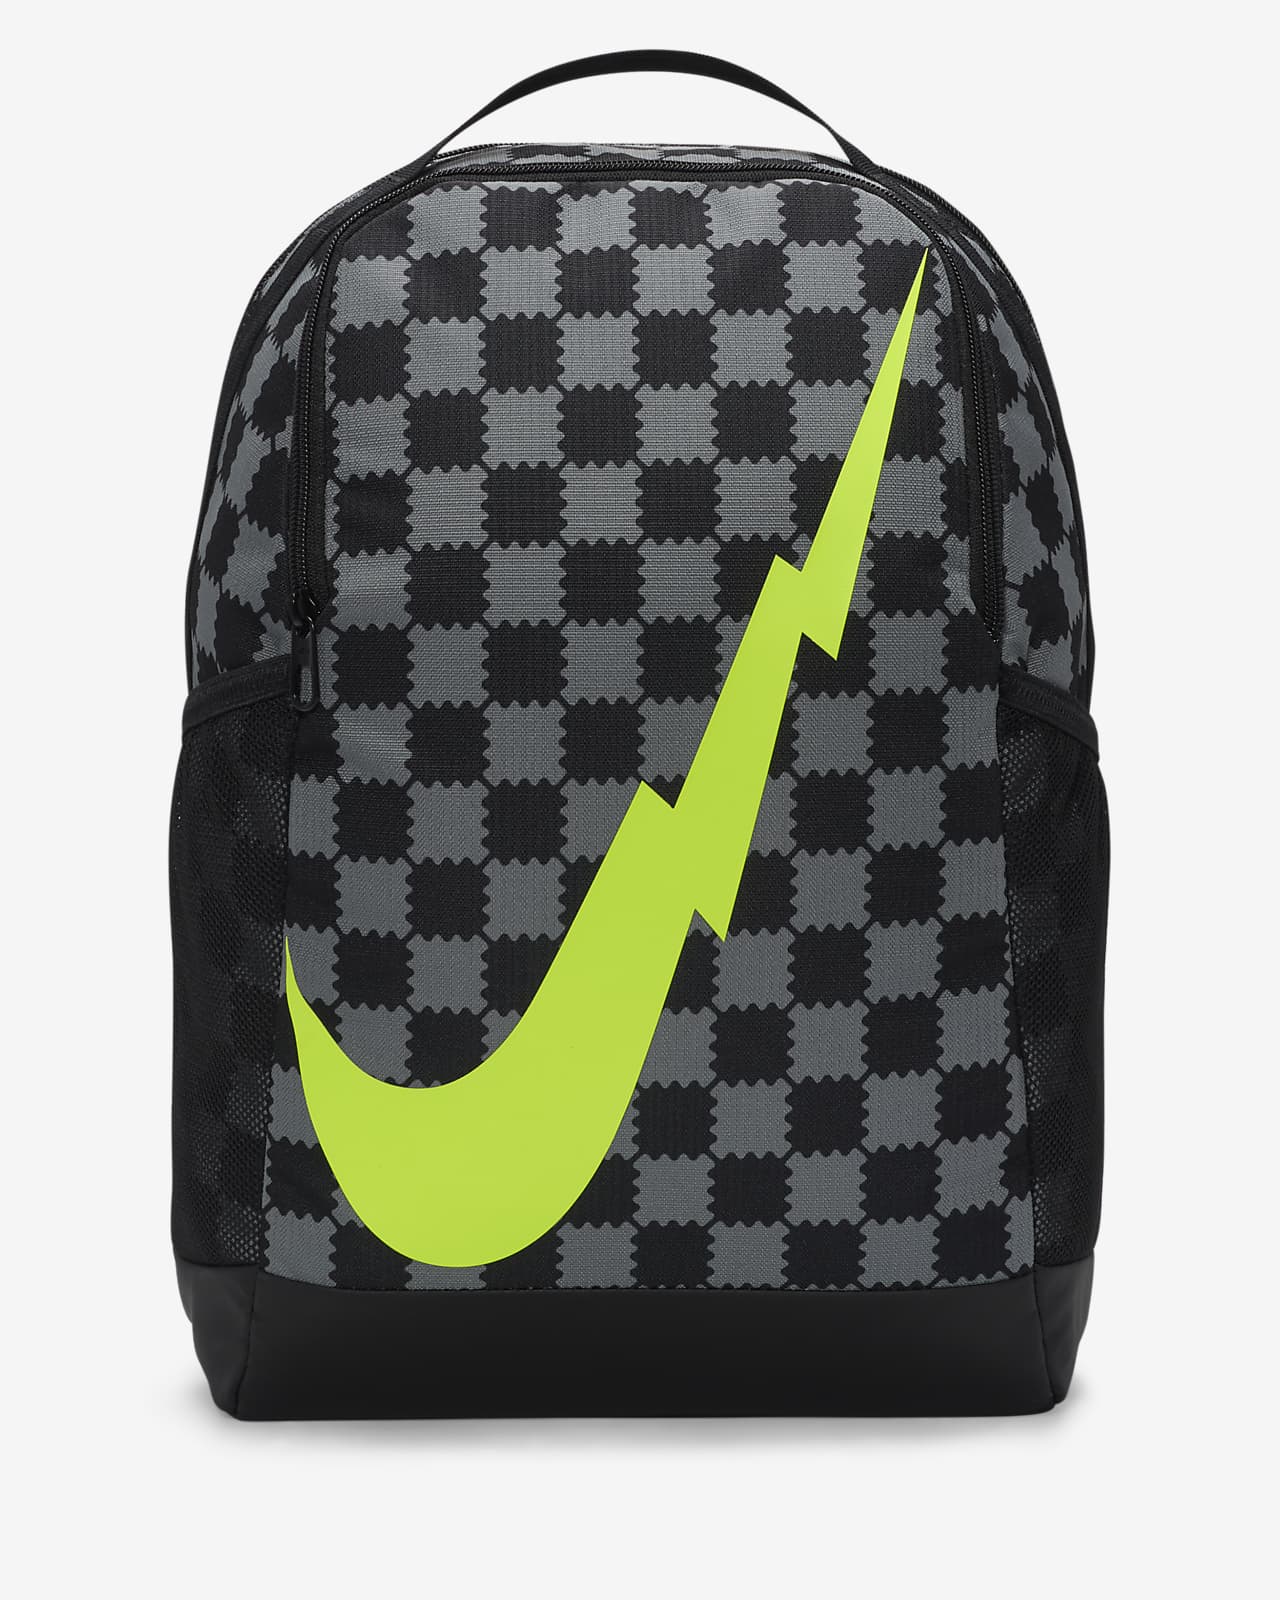 Nike Brasilia Printed Backpack 010, Sports accessories